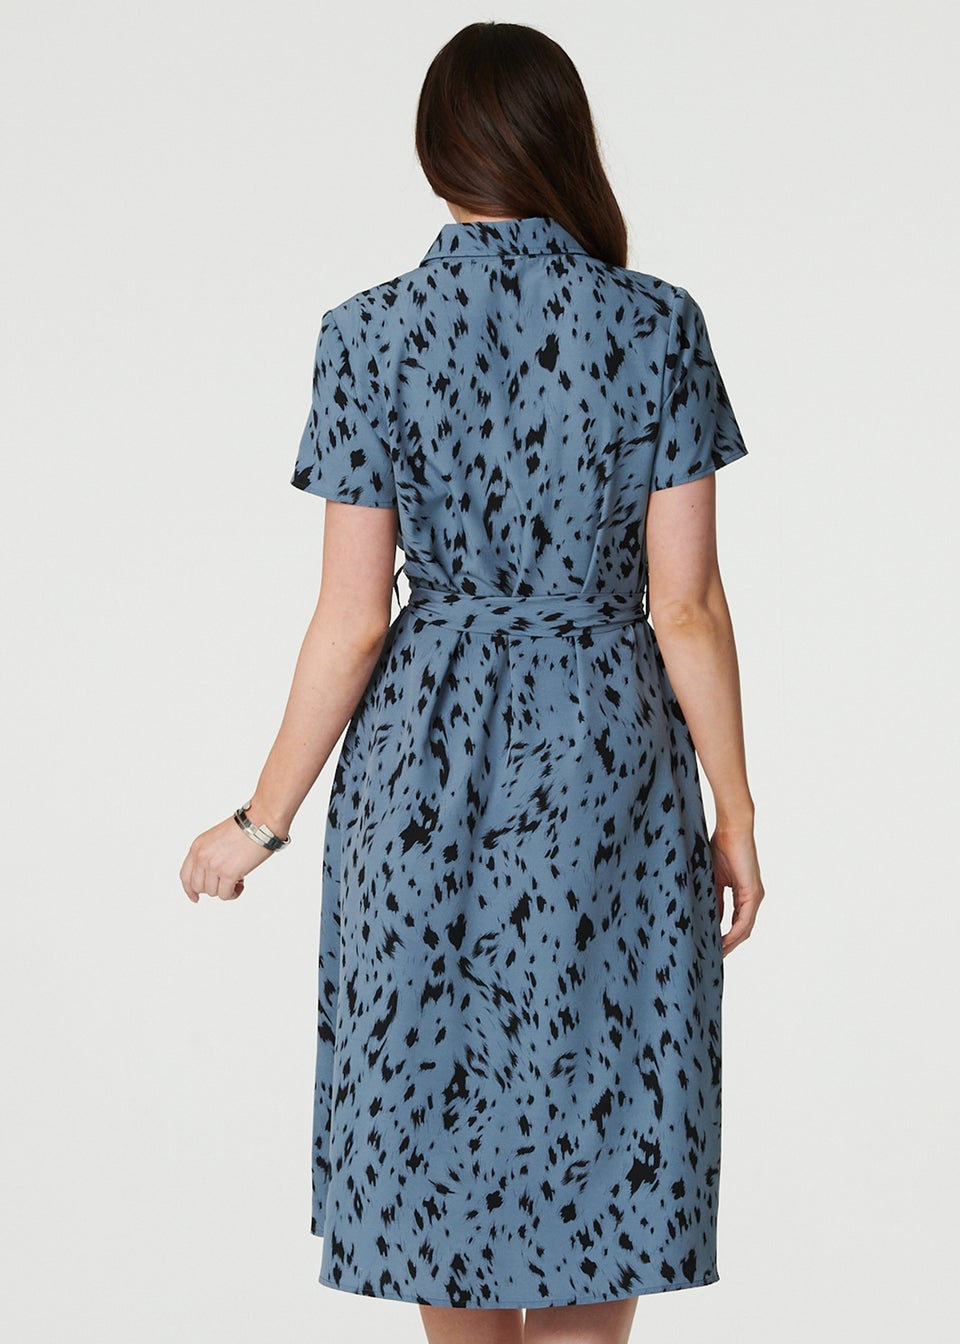 Izabel London Blue Printed Short Sleeve Shirt Dress